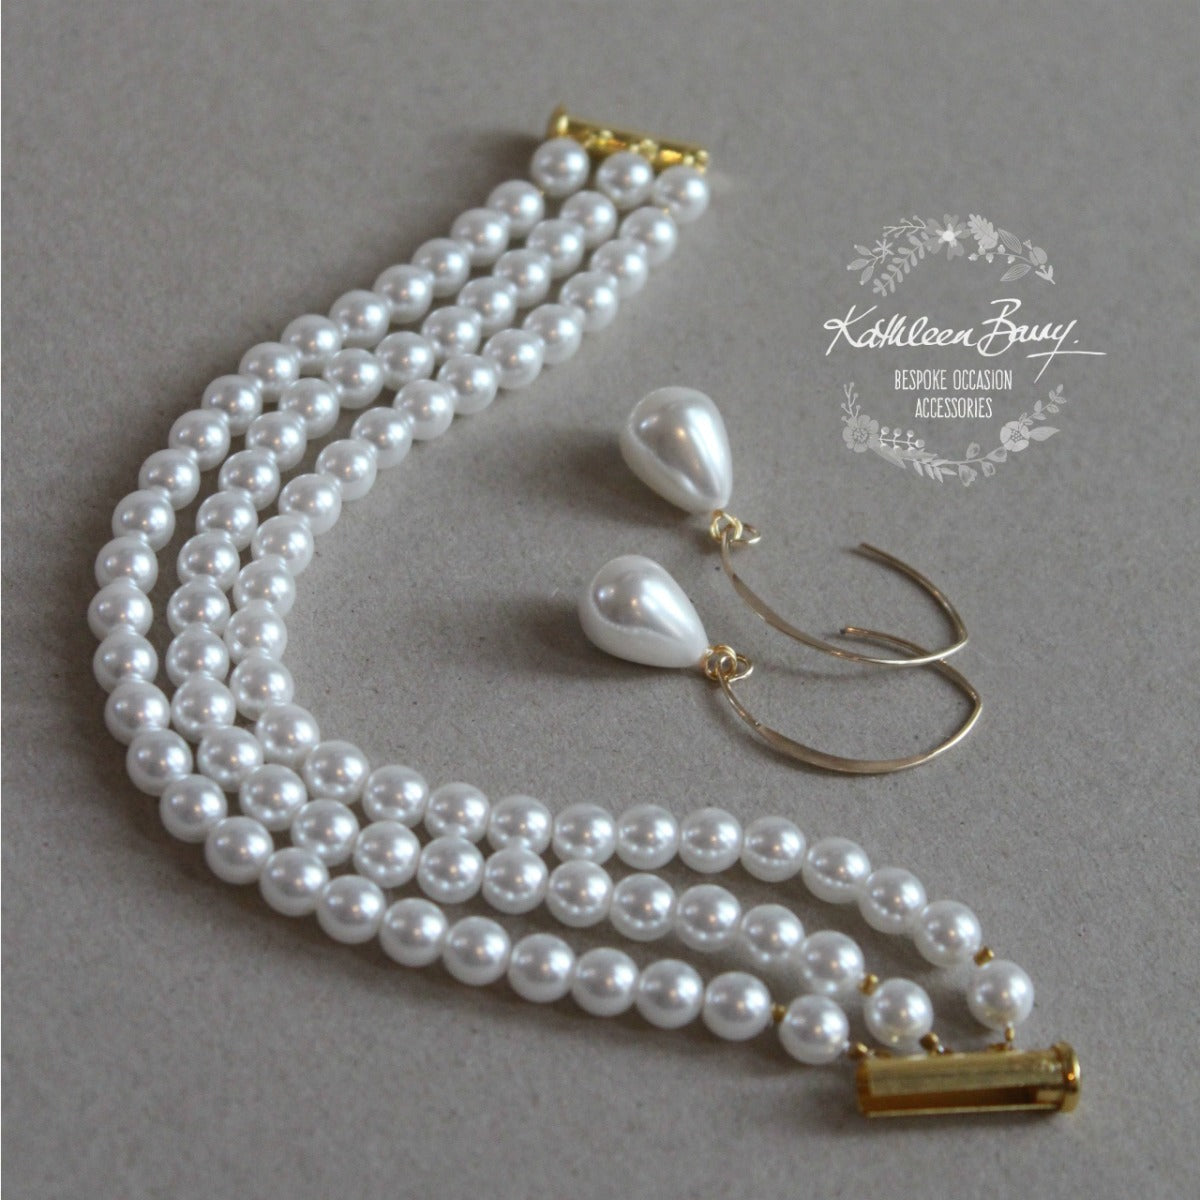 Belinda triple strand pearl bracelet - Options pearl & clasp colors